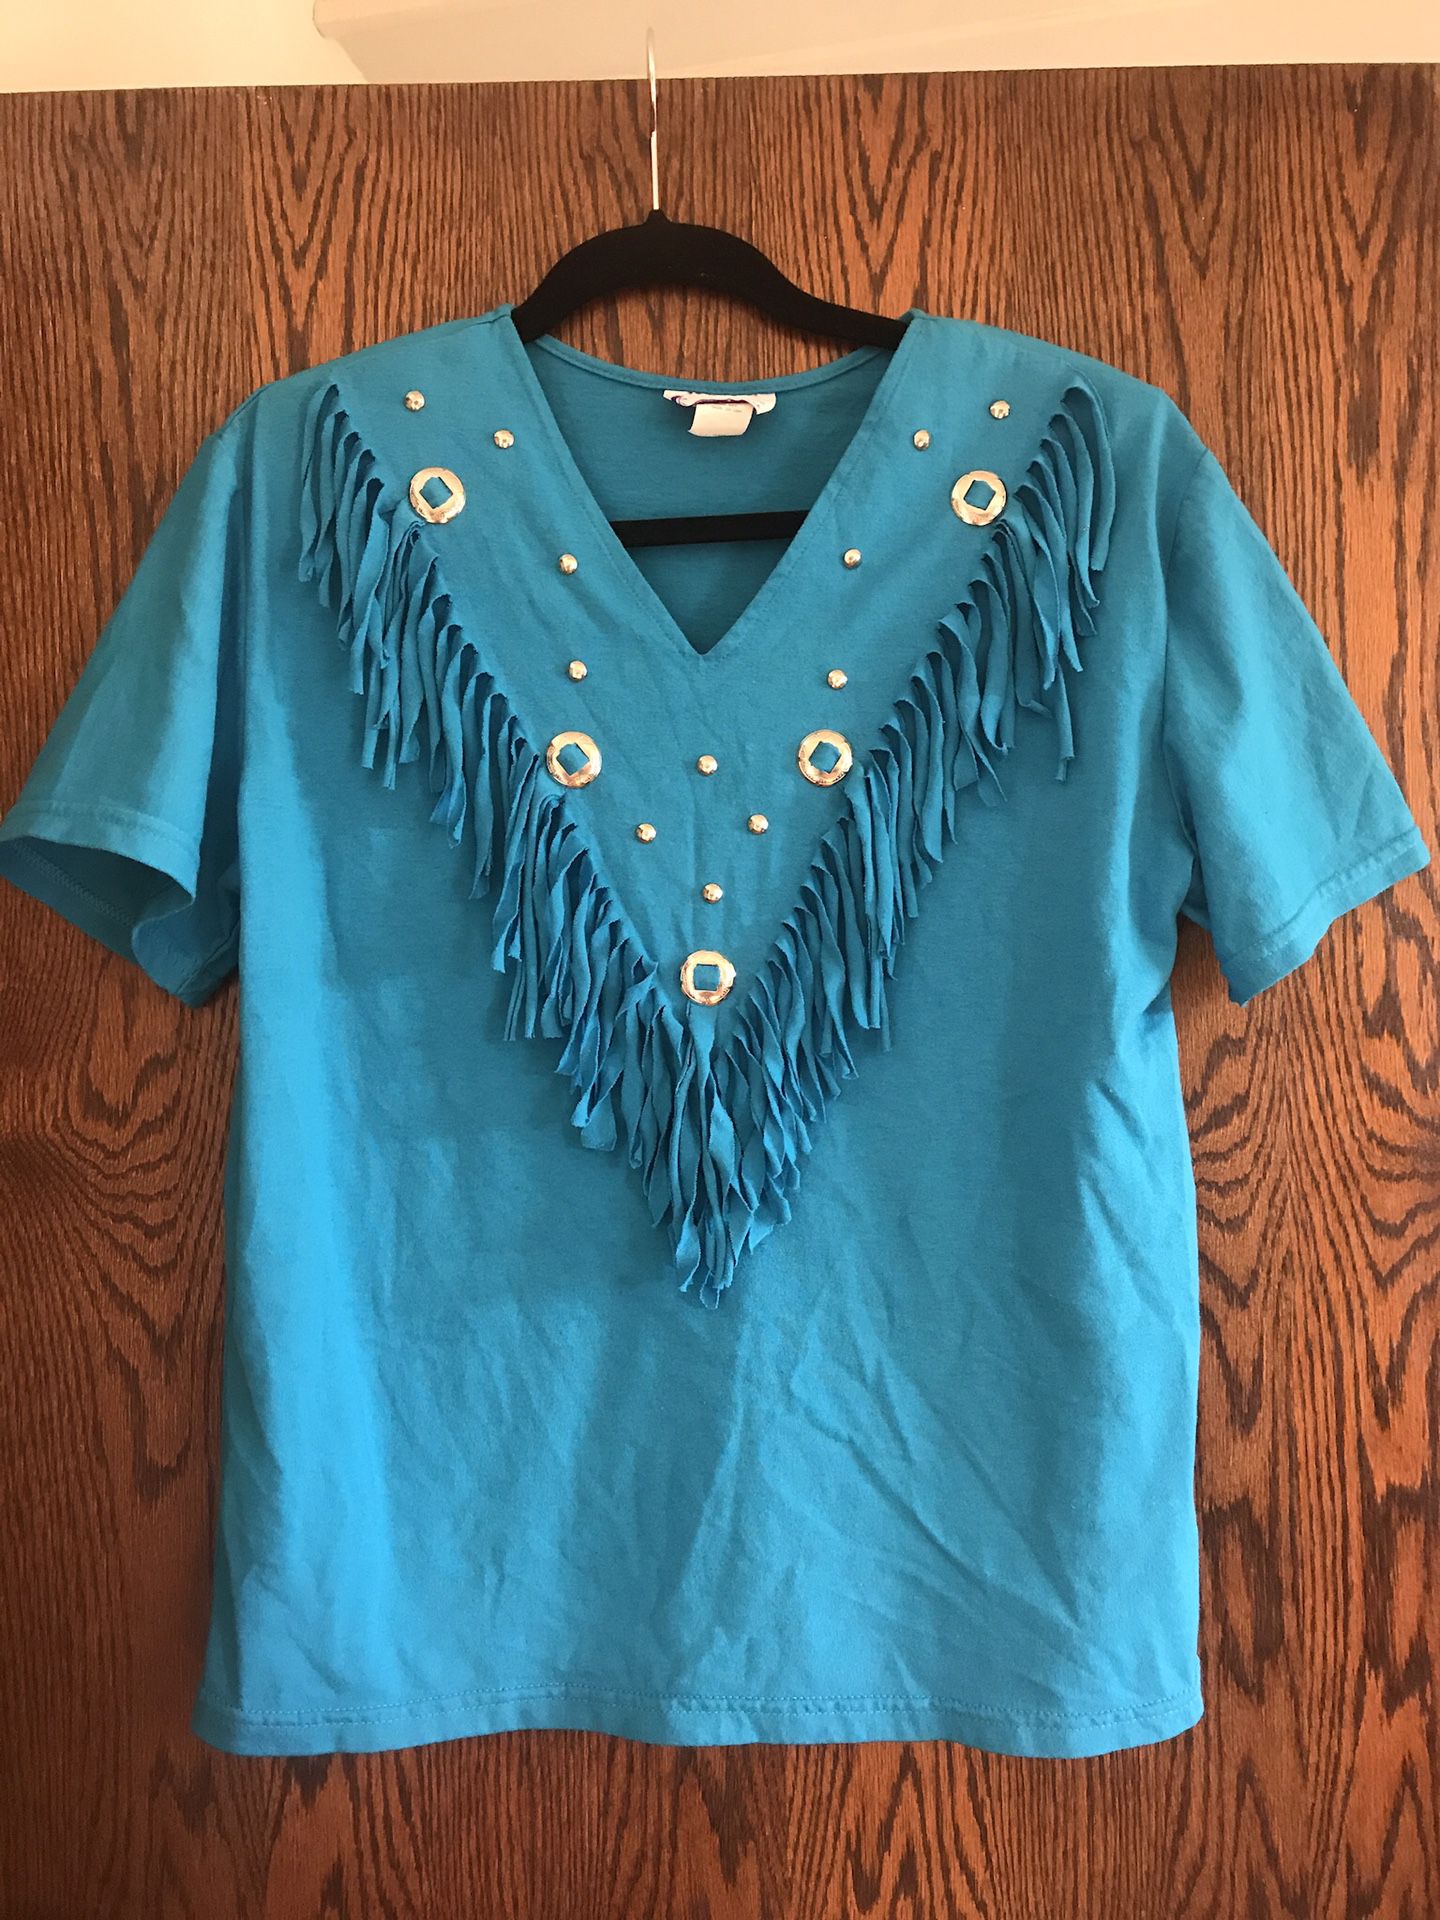 Western blue / teal t shirt